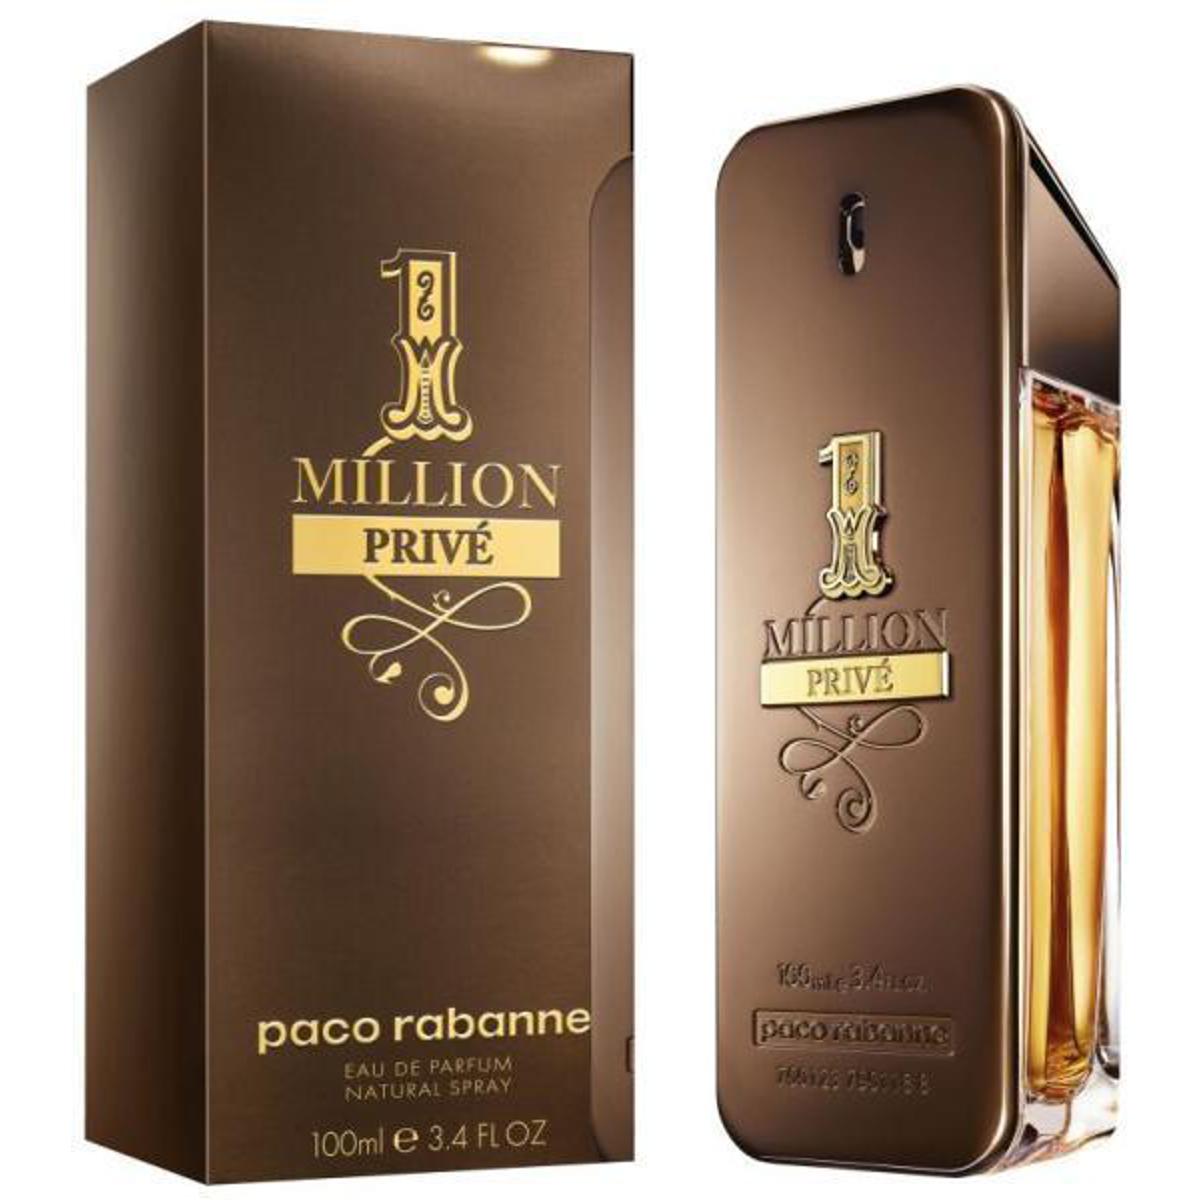 Million Prive Paco Rabanne Perfume 100ml Price in Pakistan